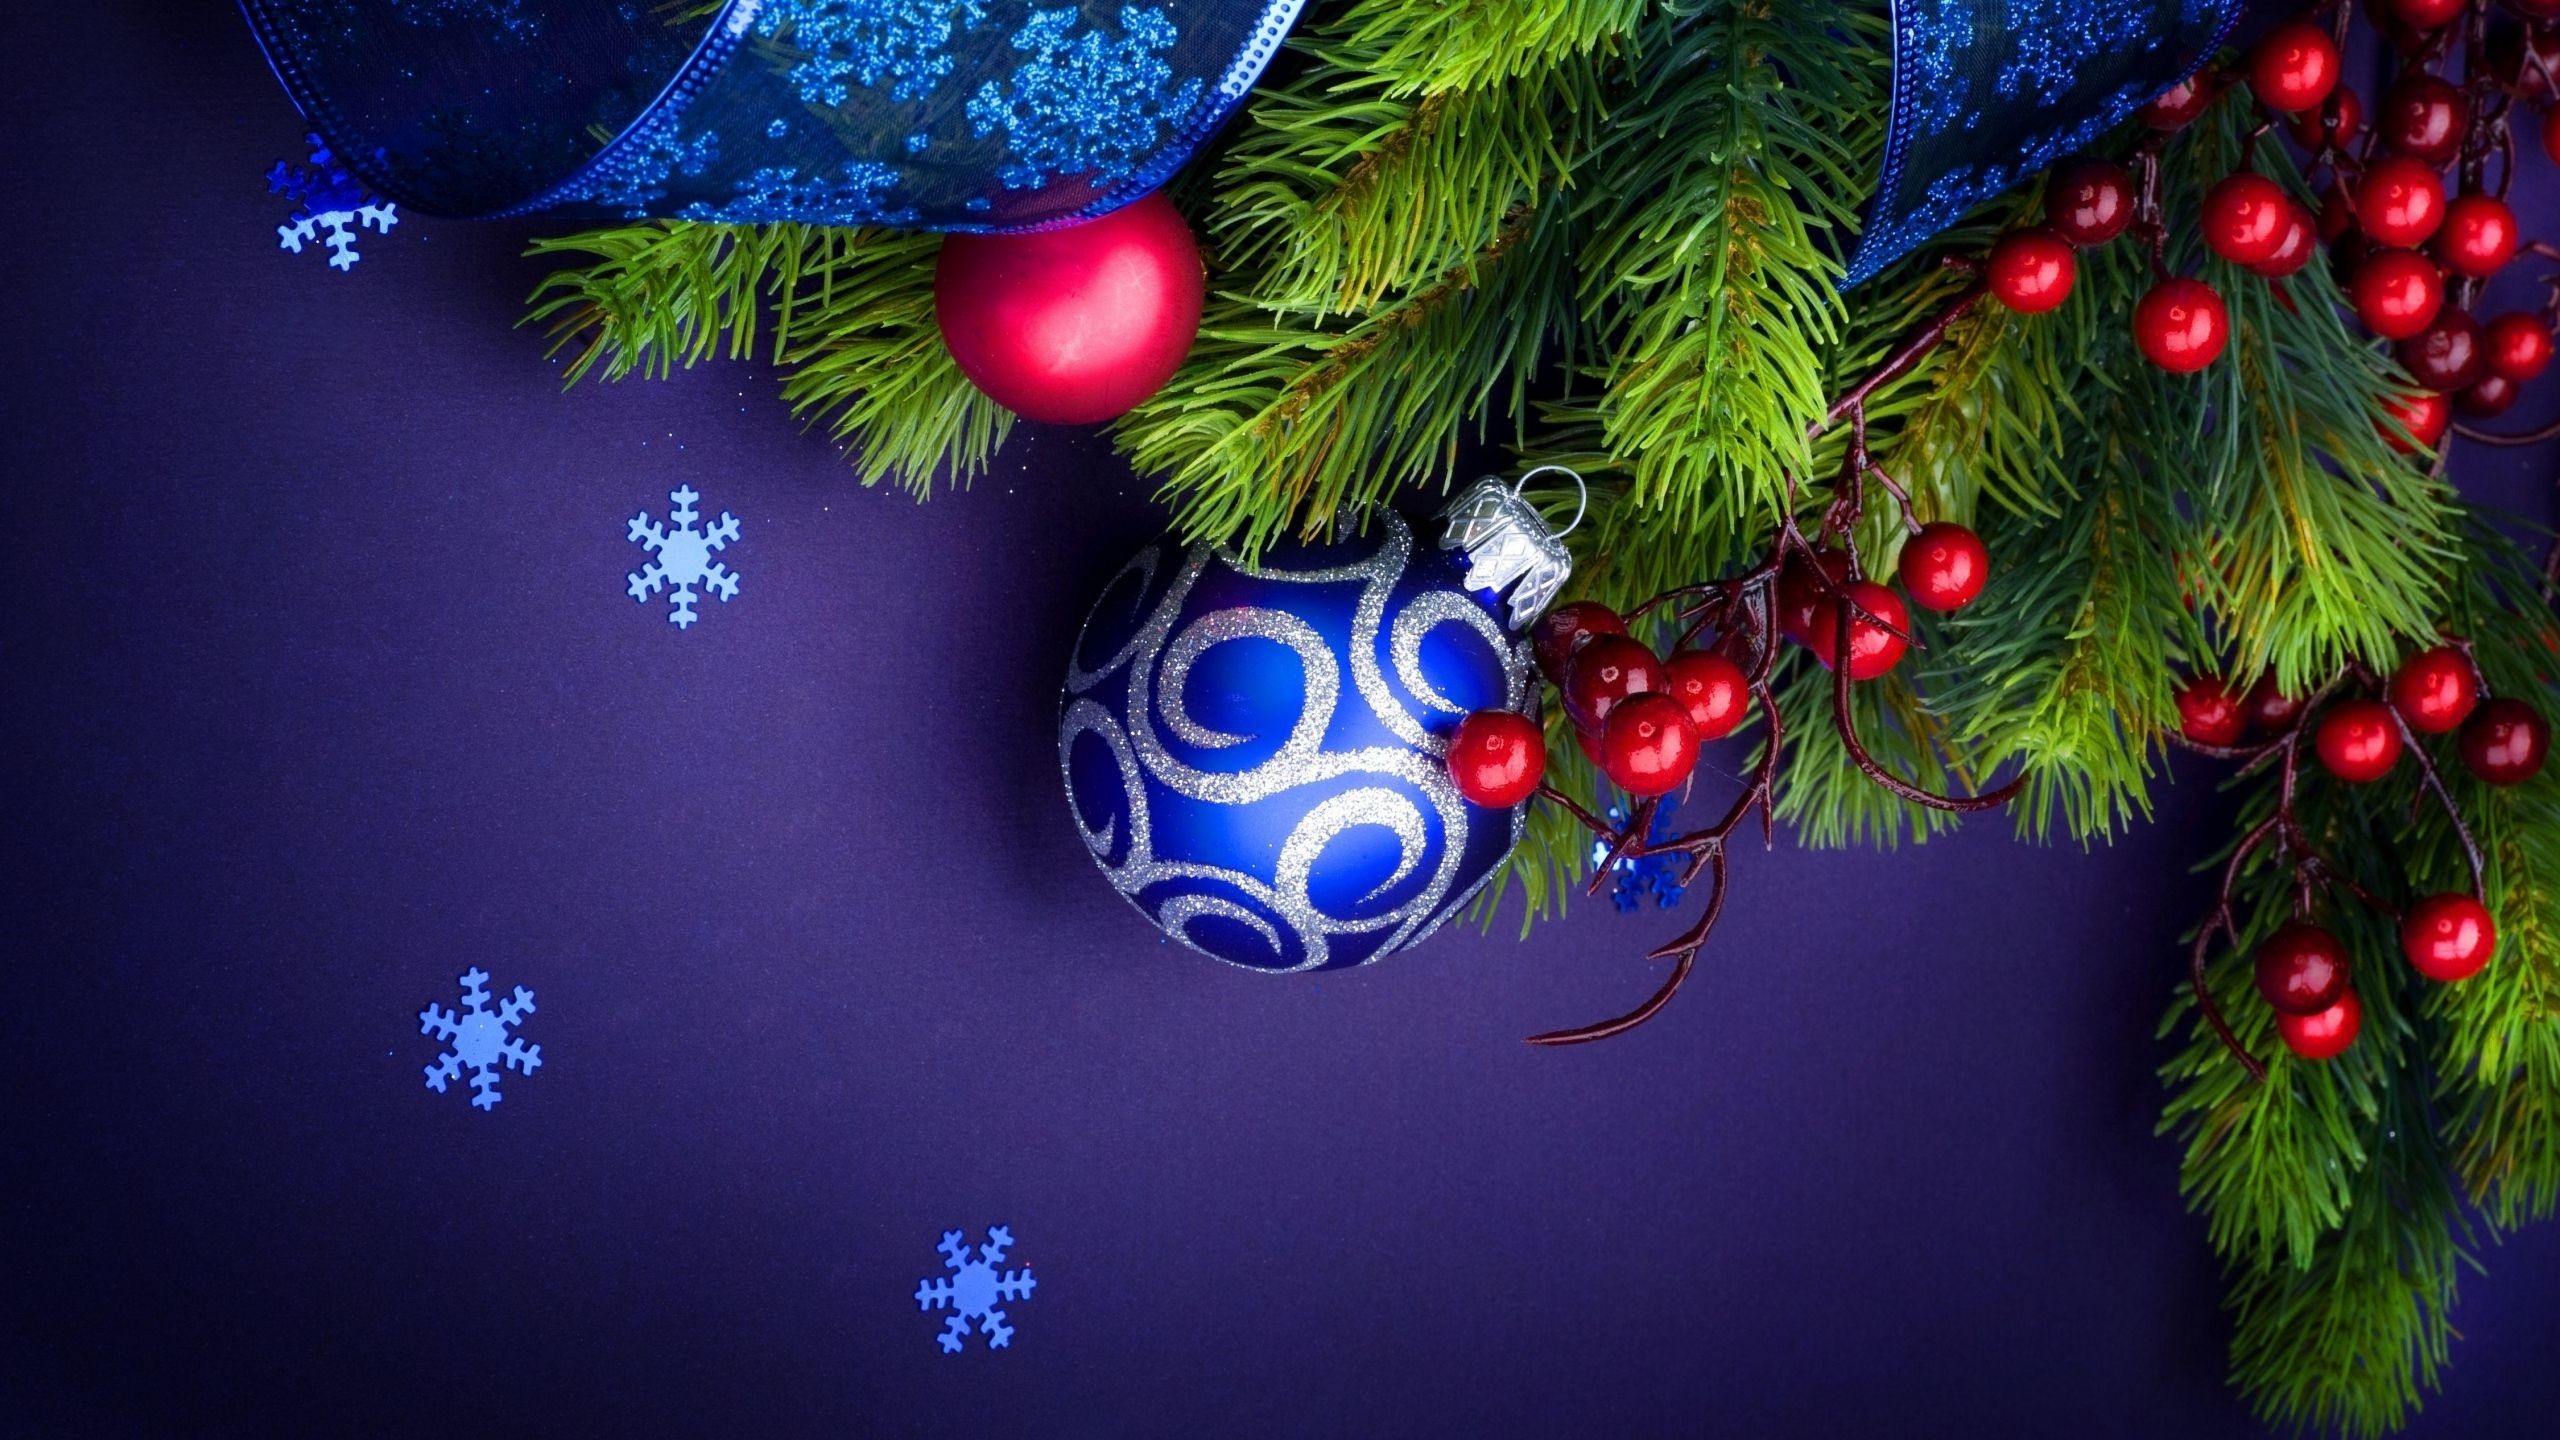 크리스마스 맥 벽지,크리스마스 장식,나무,크리스마스 트리,크리스마스,전나무